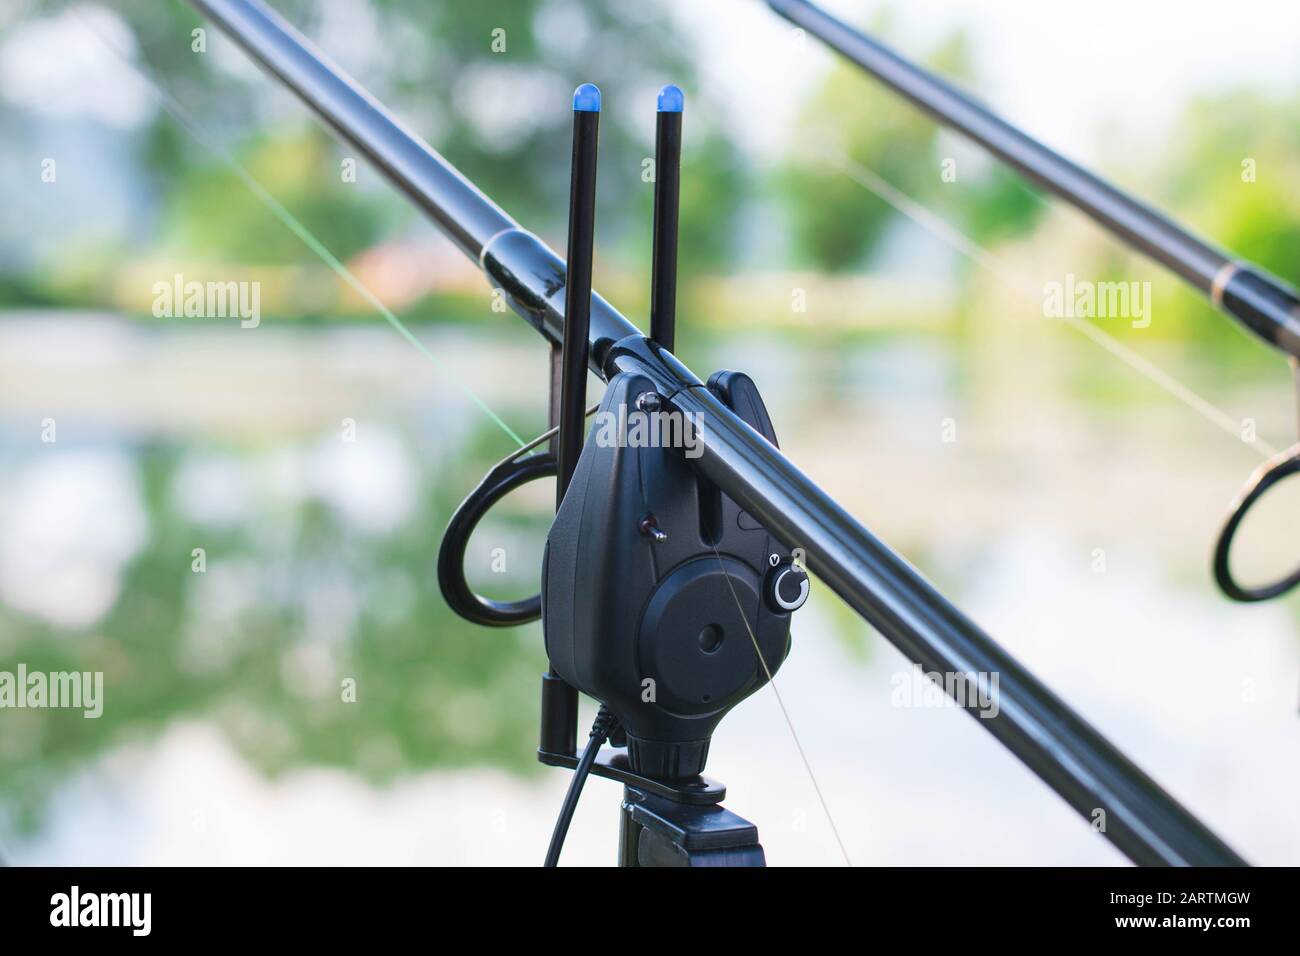 Professional carp fishing bite alarm, close-up from lakeside